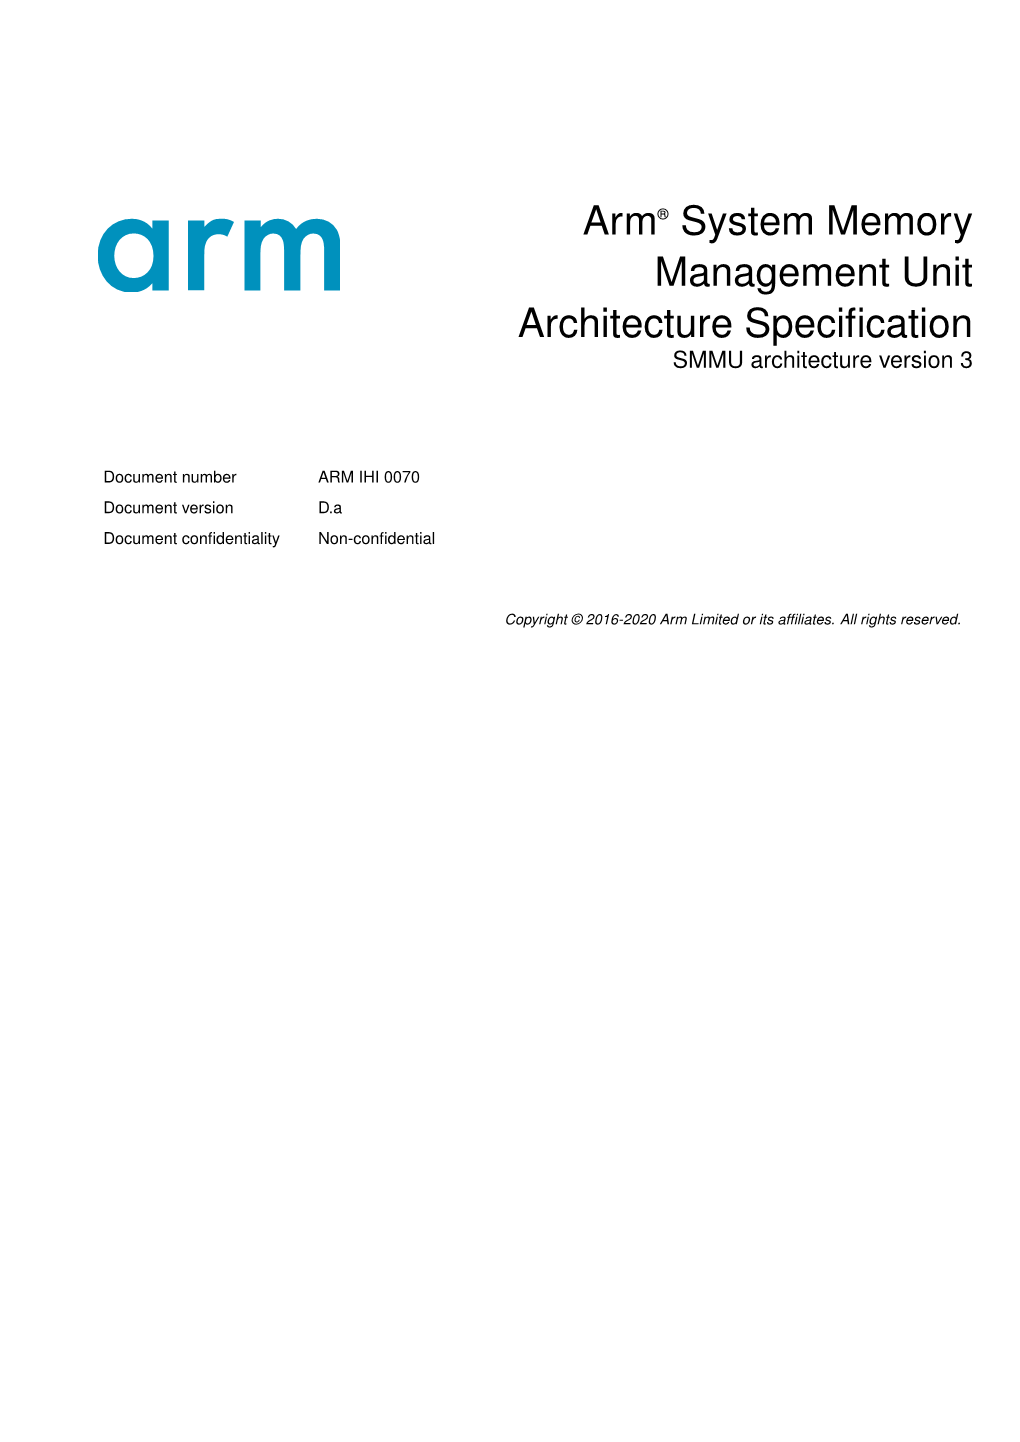 Arm System Memory Management Unit Architecture Specification